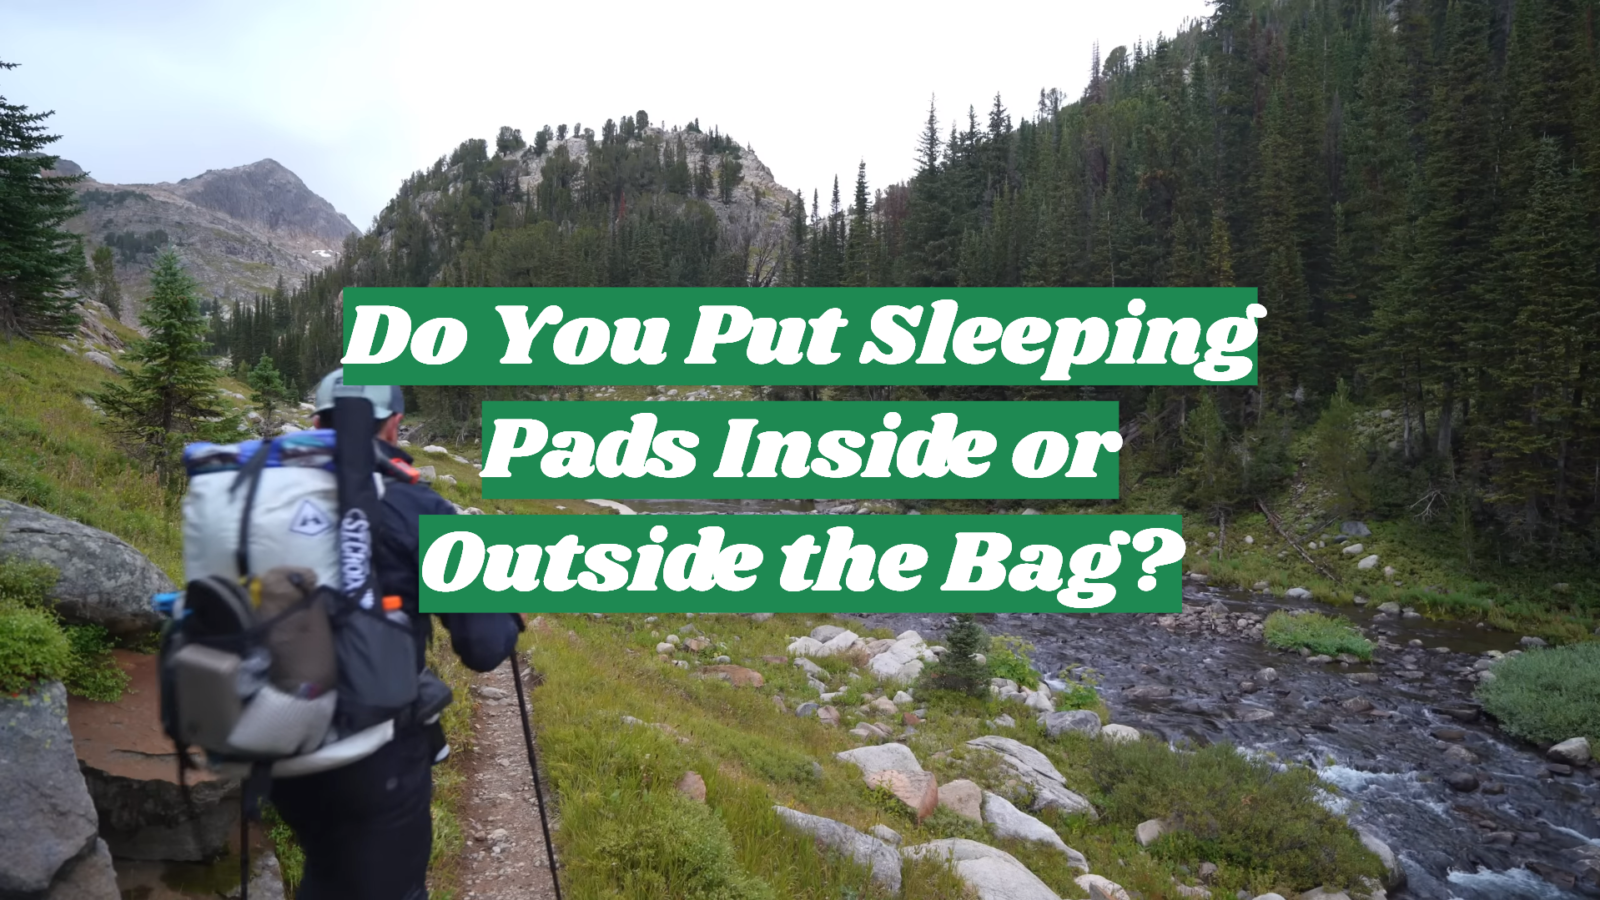 Do You Put Sleeping Pads Inside or Outside the Bag?